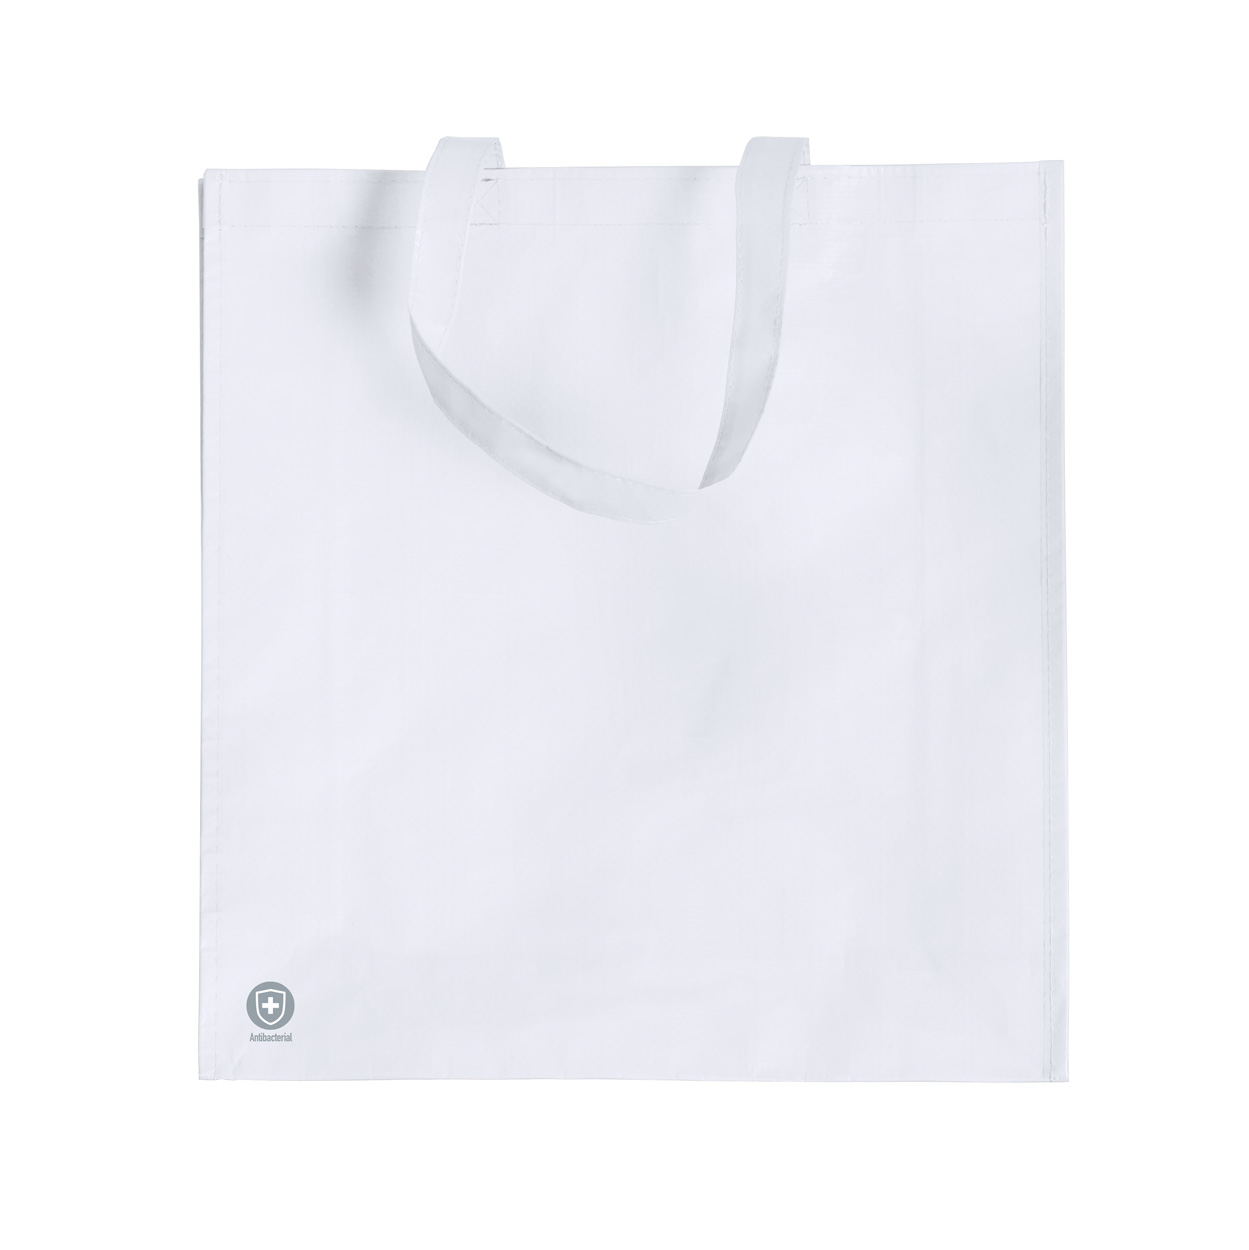 Kiarax antibacterial shopping bag - white